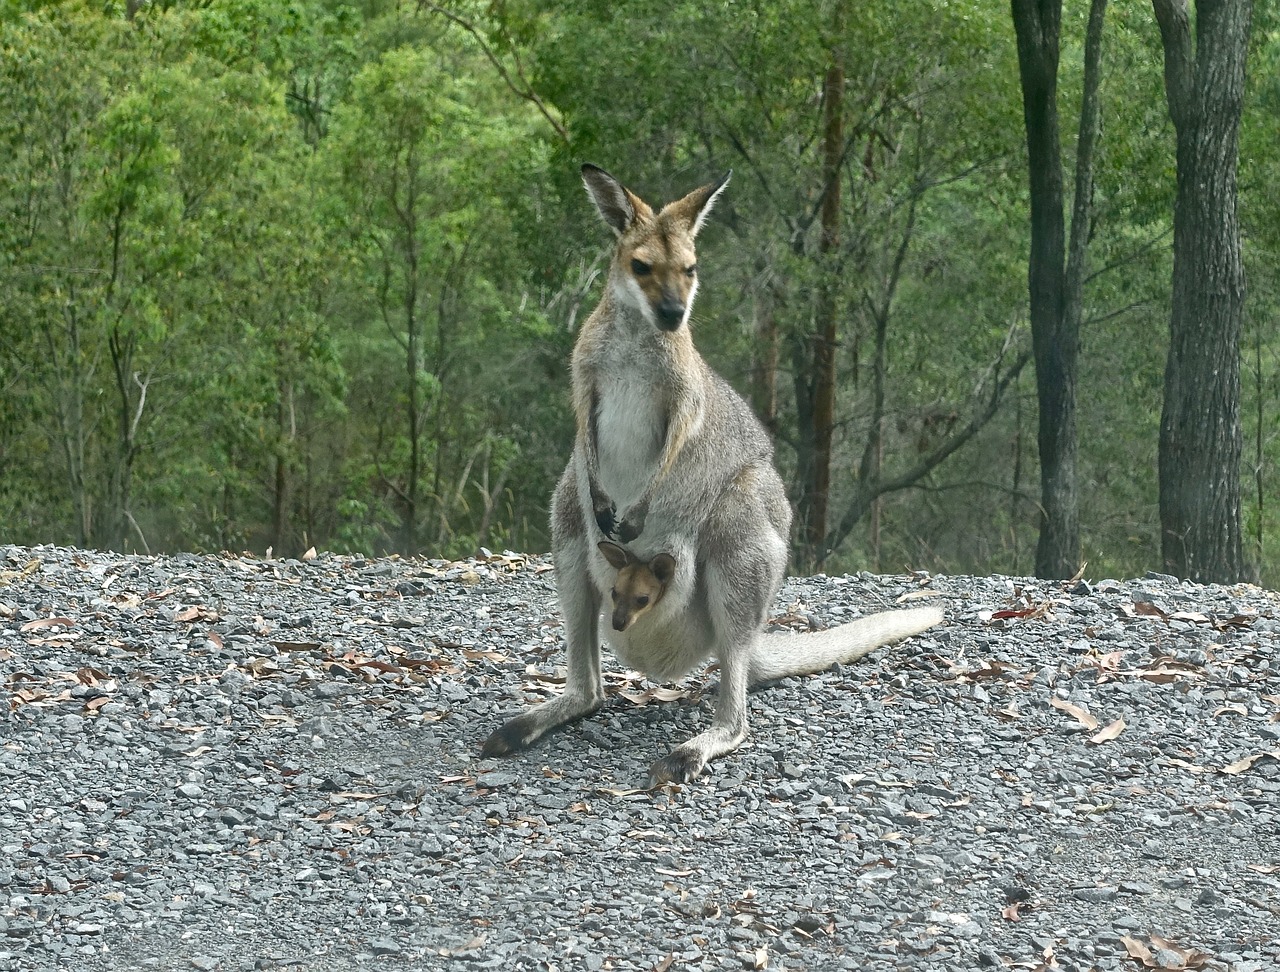 kangaroo wallaby joey free photo